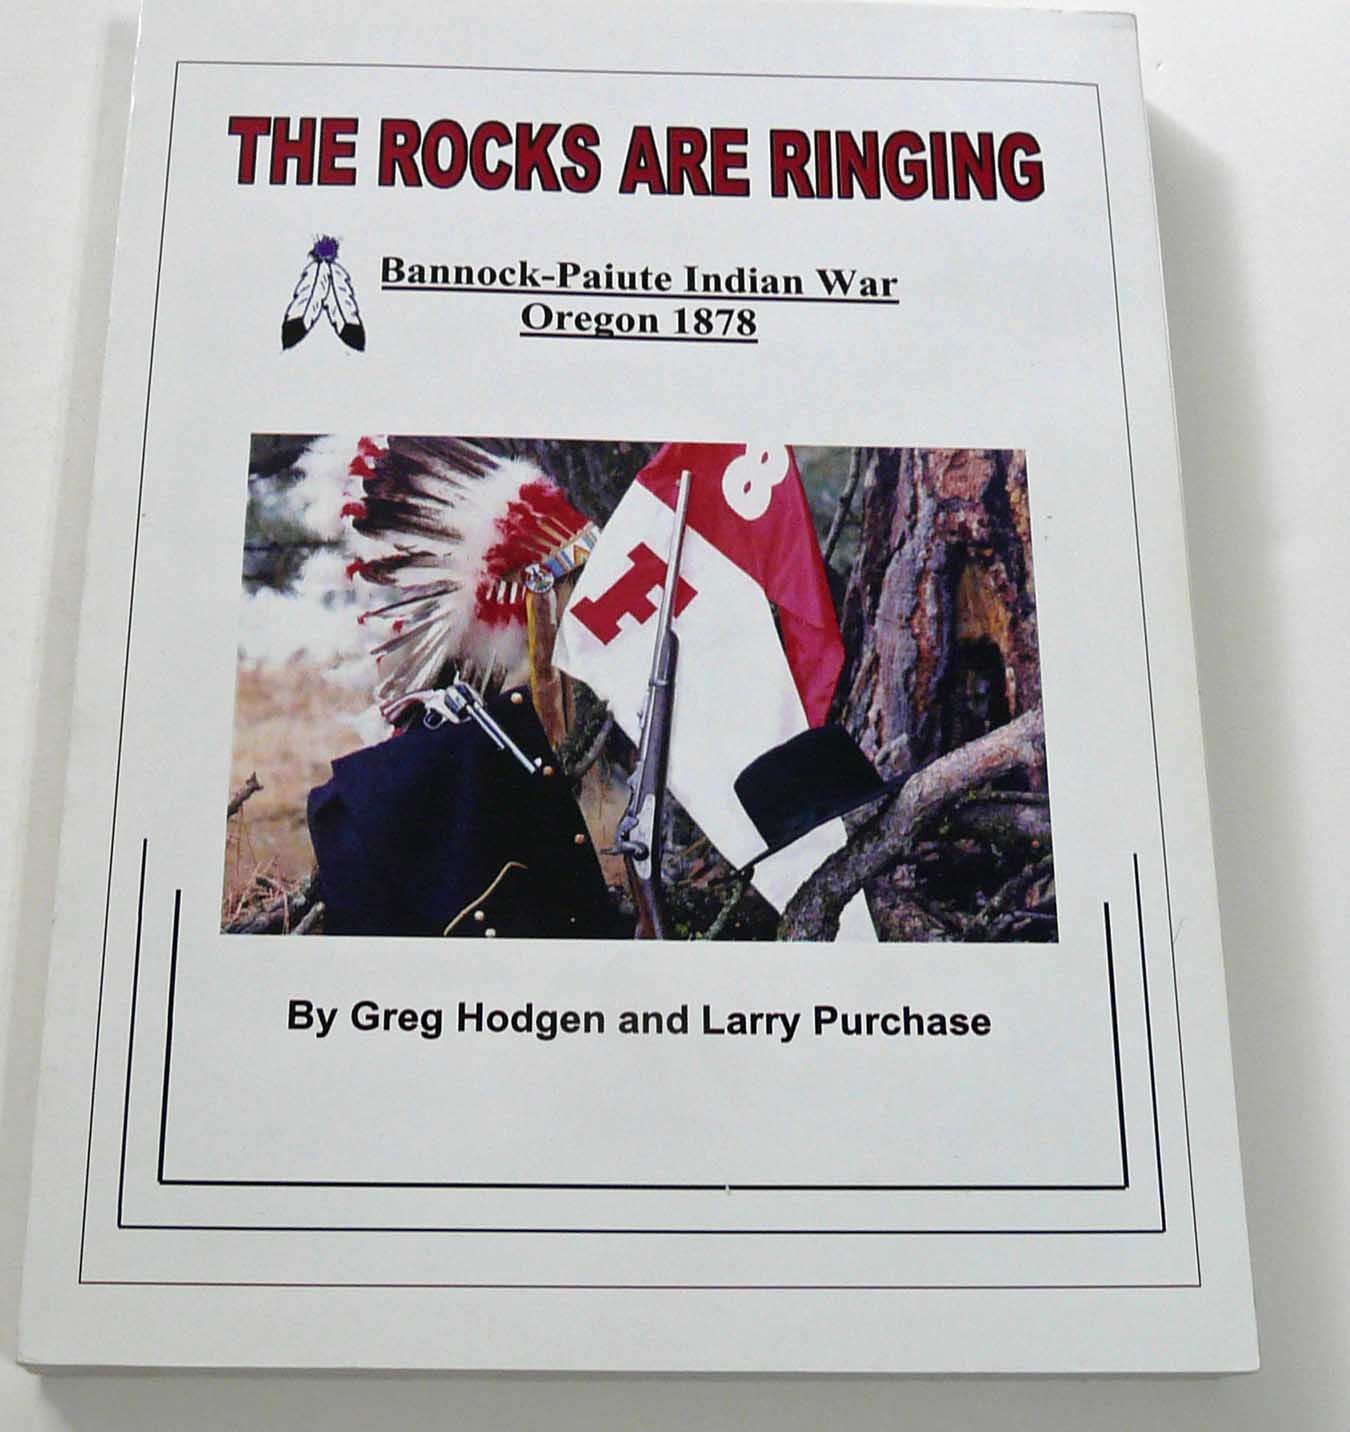 The rocks are ringing: Bannock-Paiute Indian War, Oregon, 1878 (book cover)